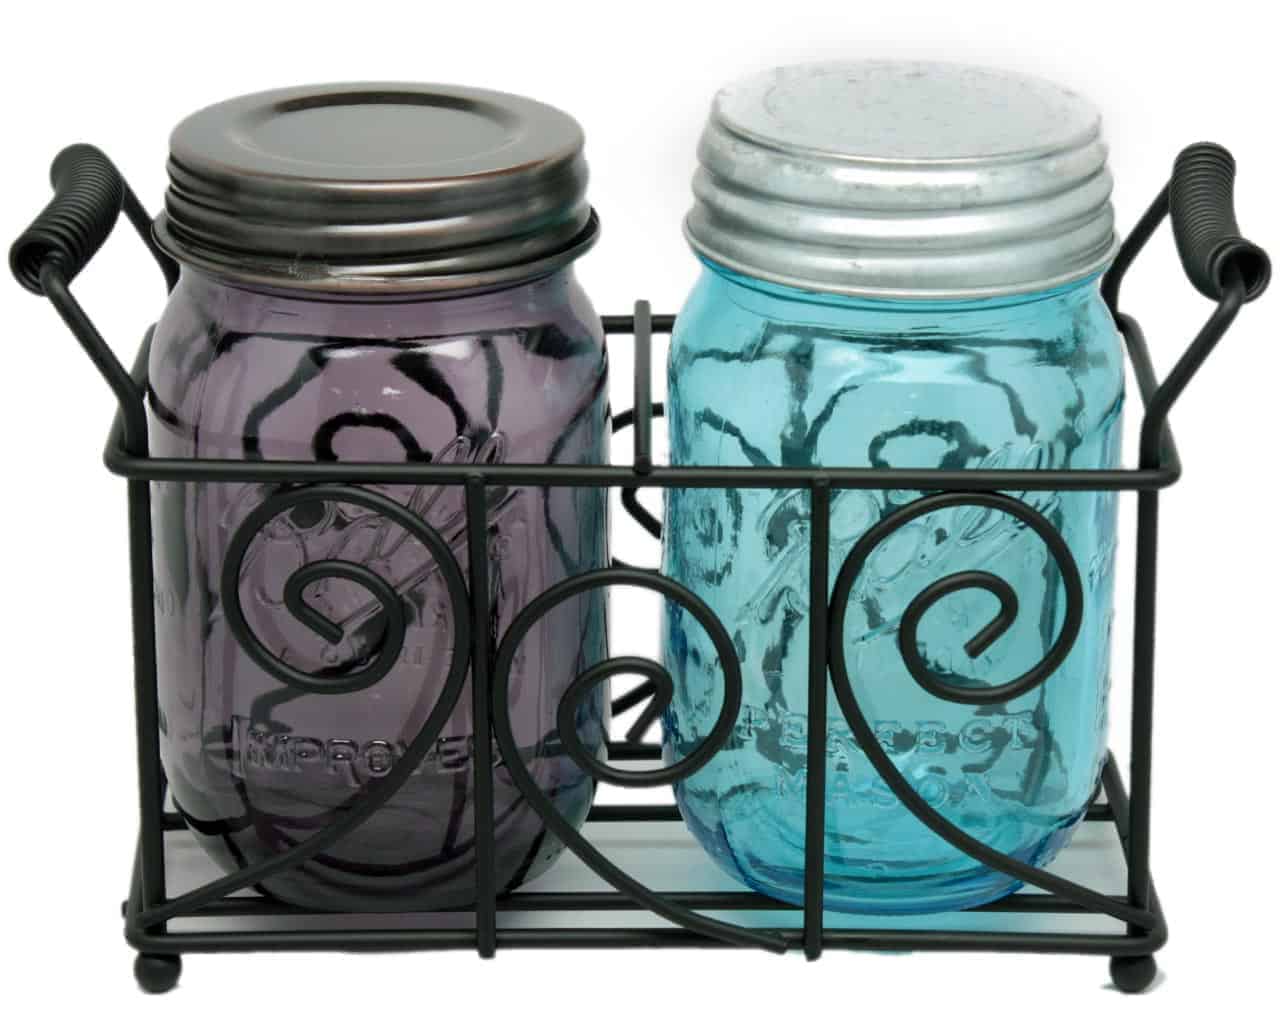 two-pint-mason-jar-decorative-caddy-black-metal-swirl-wire-handles-galvanized-oil-rubbed-bronze-lids-blue-purple-ball